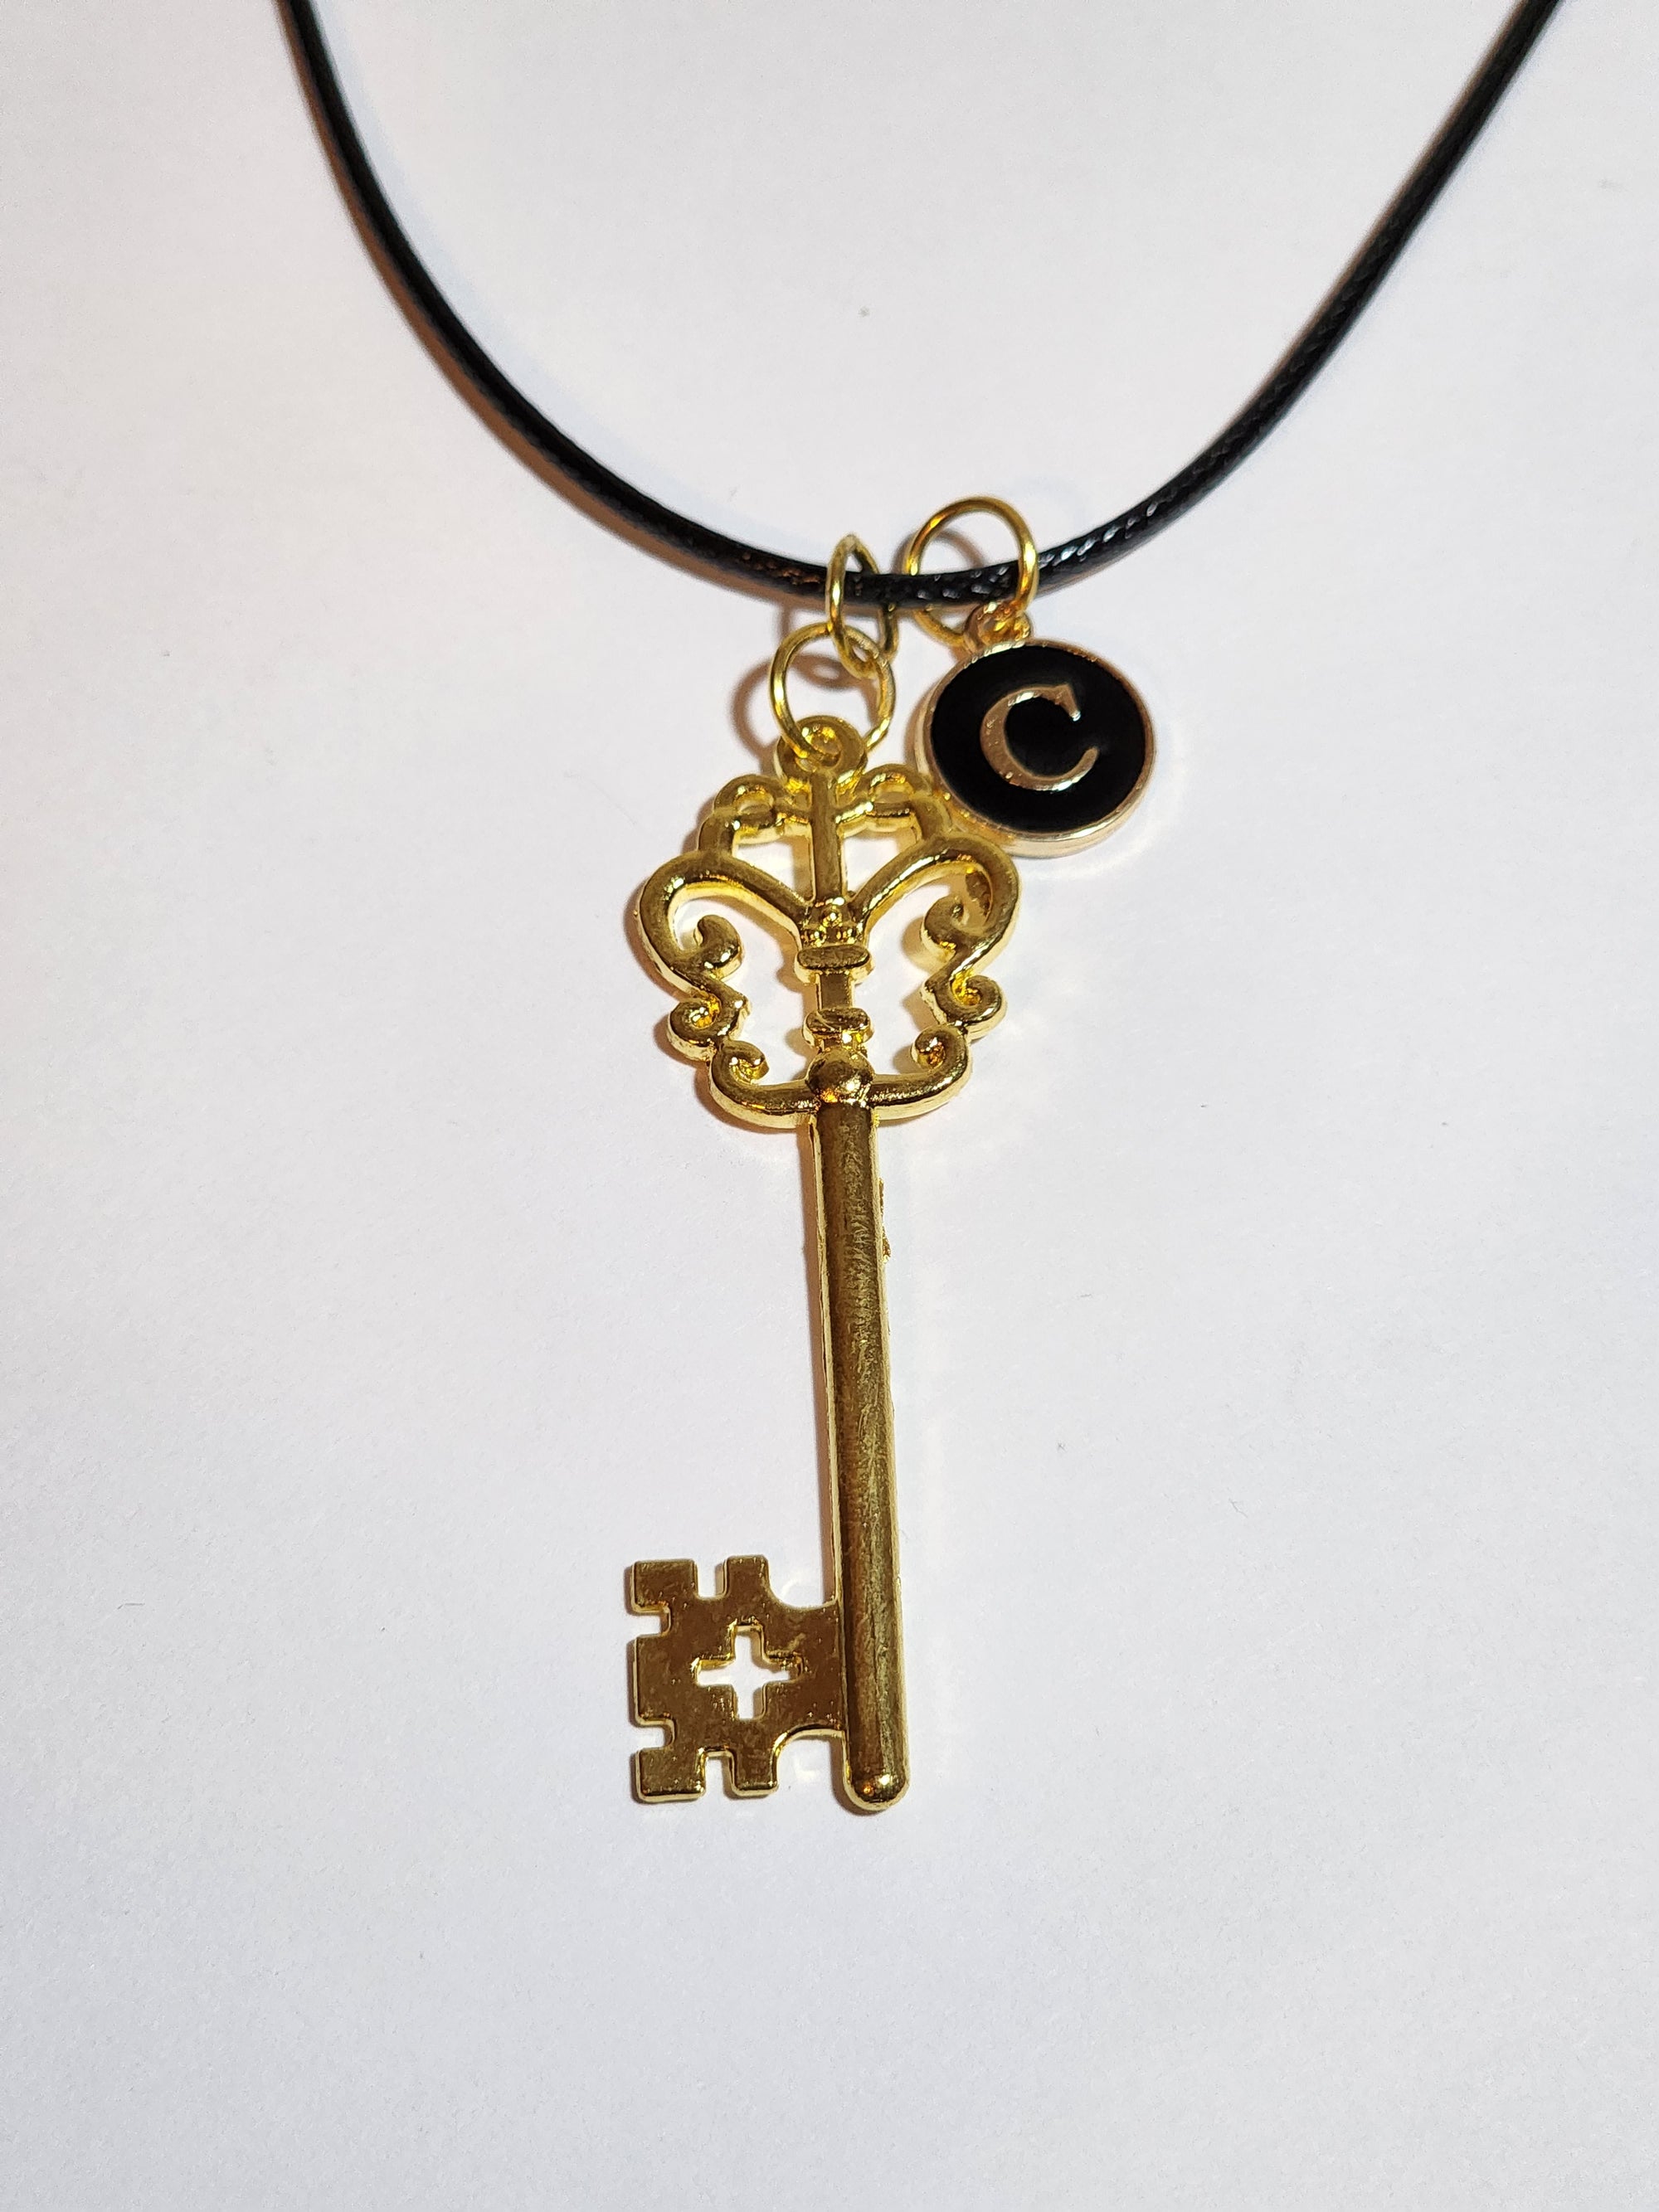 Elegant key necklace with letter